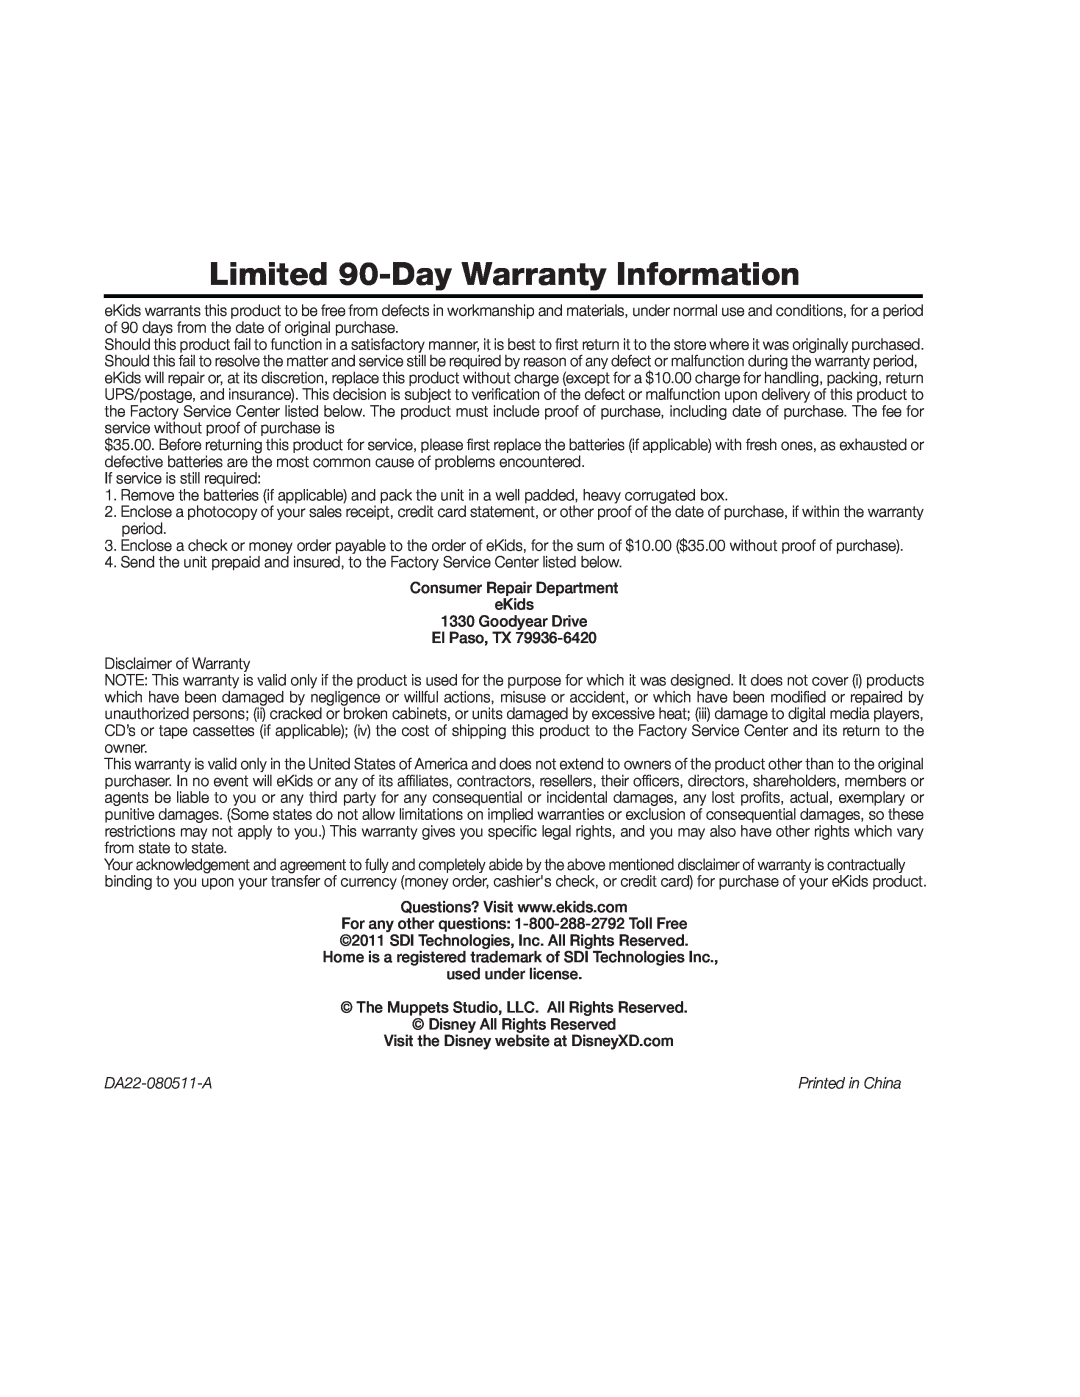 iHome ihome manual Limited 90-DayWarranty Information, DA22-080511-A 